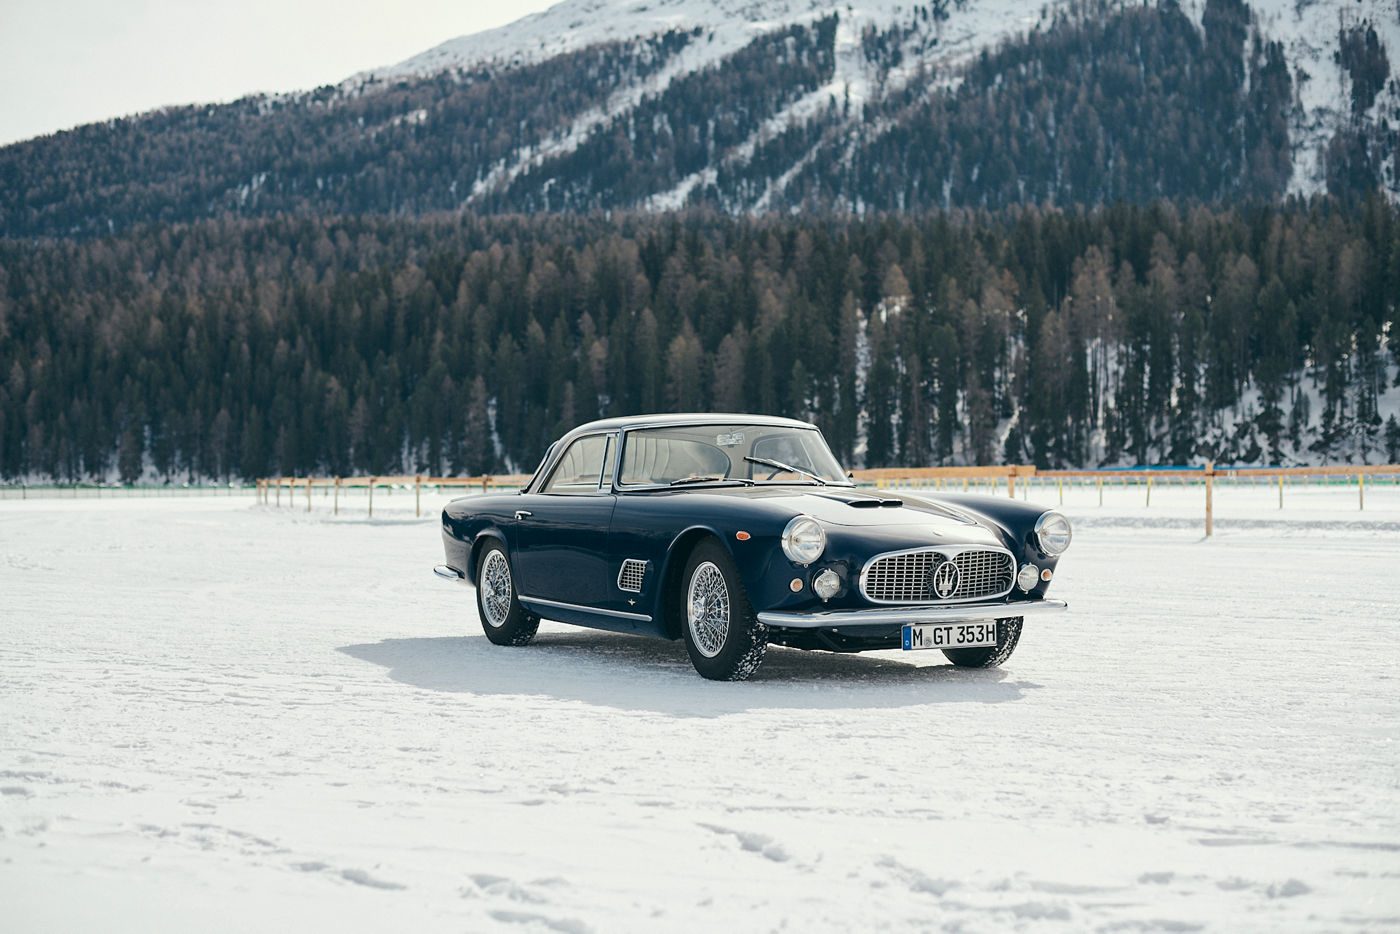  Maserati 3500 GT Vignale at THE ICE, St. Moritz car contest 2023